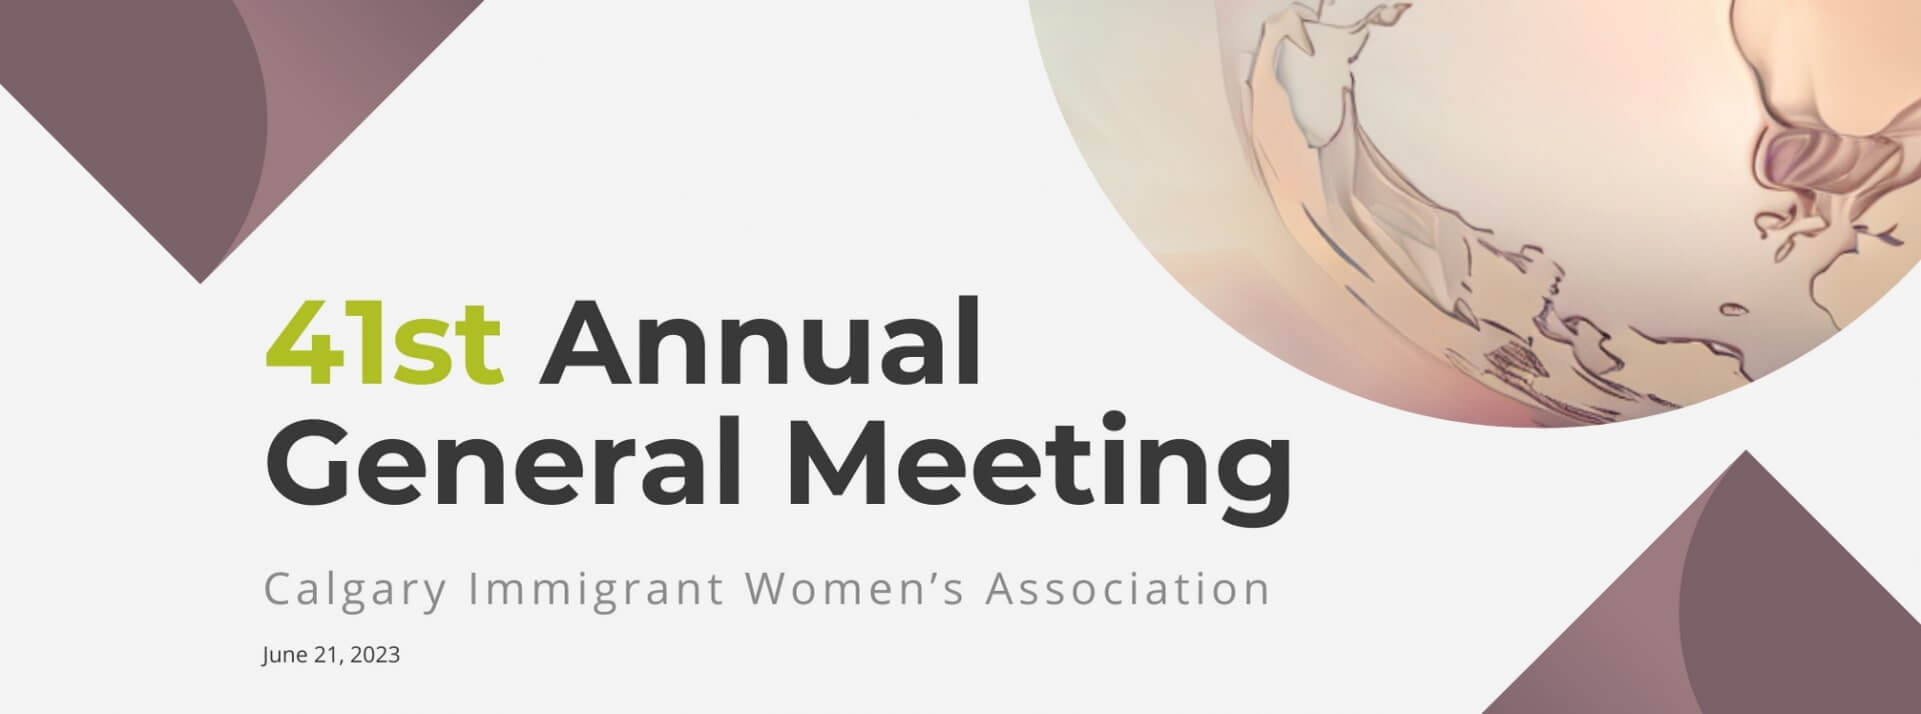 CIWA's 41st Annual General Meeting: Such A Success